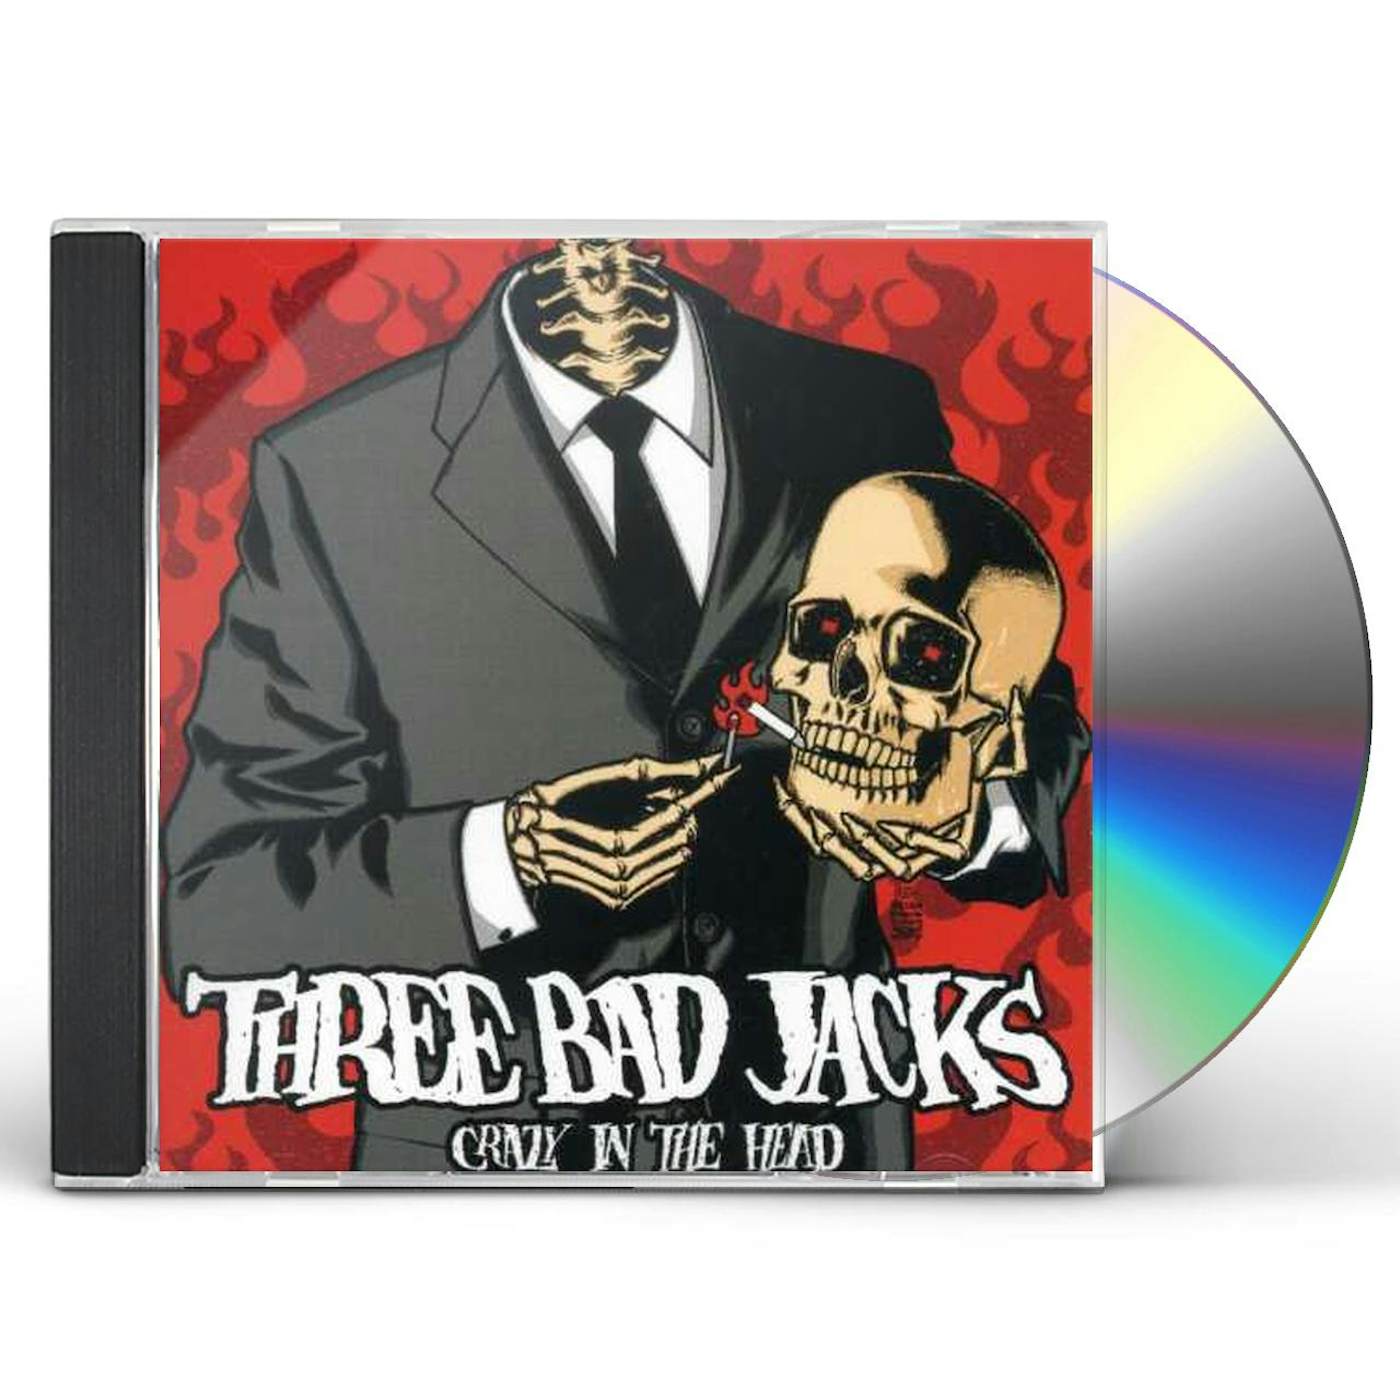 Three Bad Jacks CRAZY IN THE HEAD CD